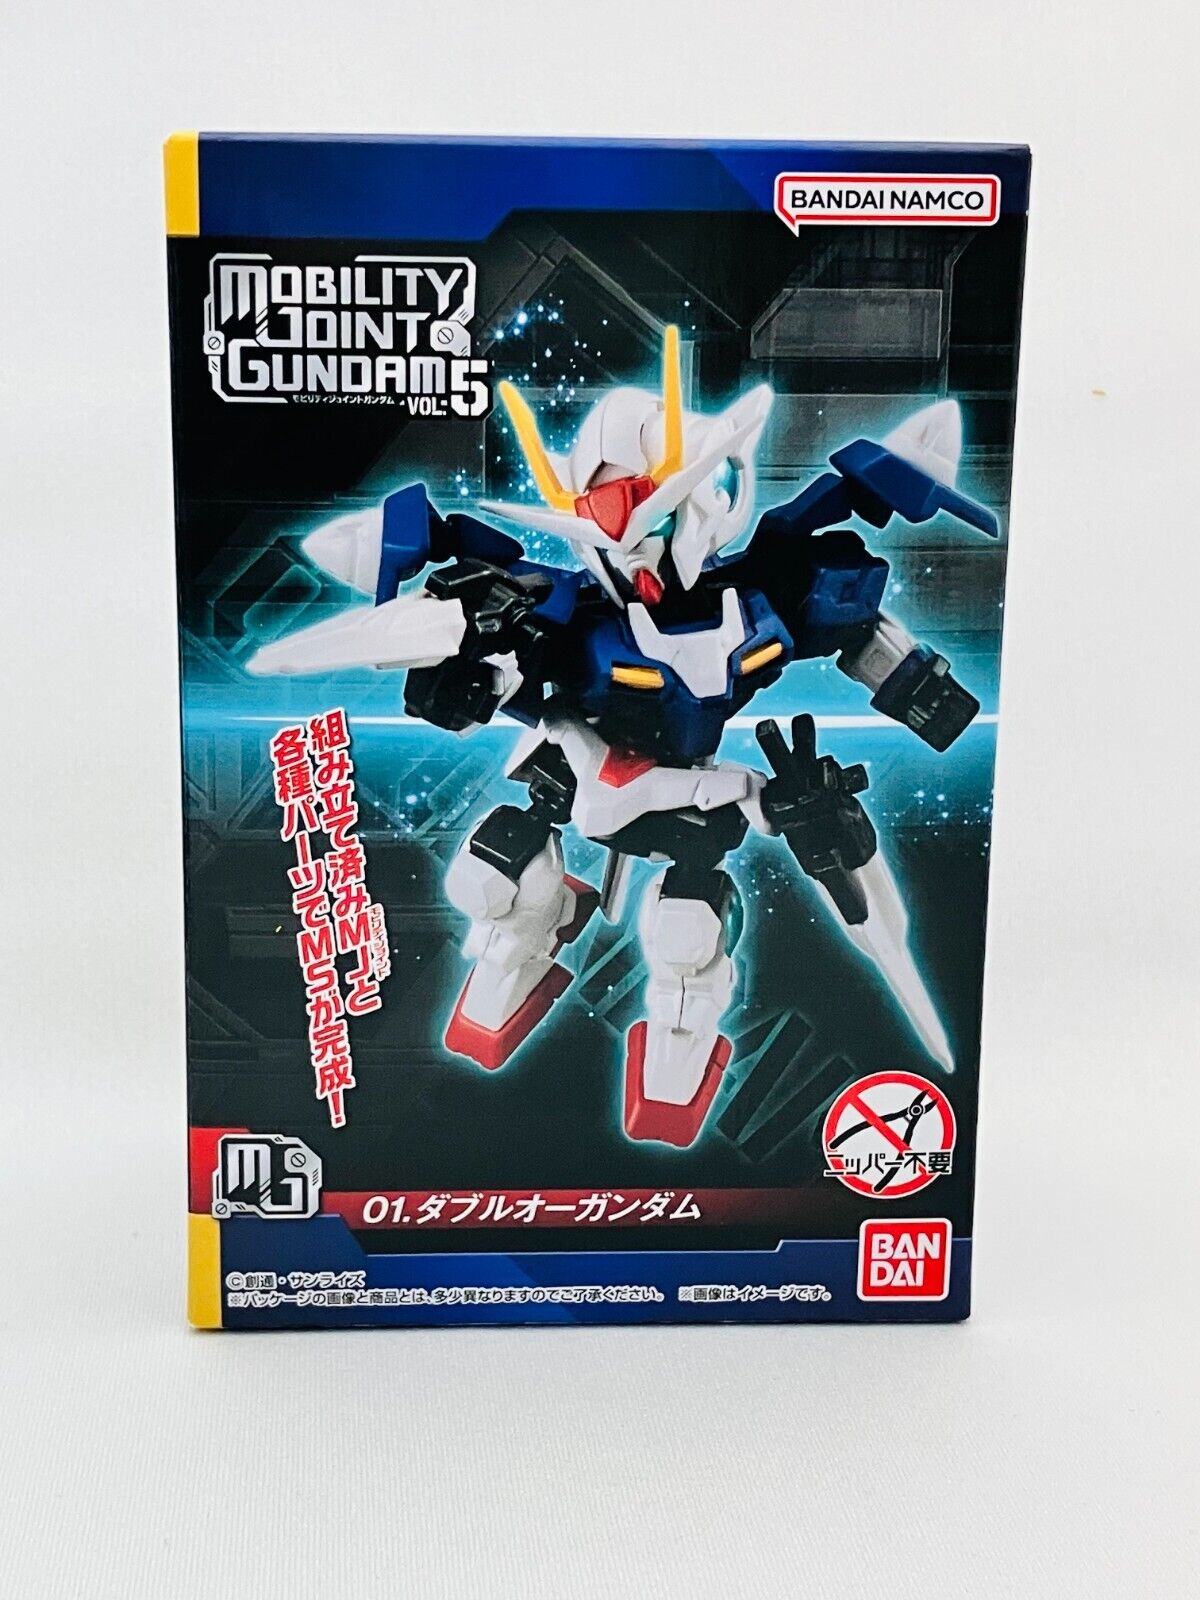 FW MOBILITY JOINT GUNDAM VOL.5 / 1. Gundam 00 BANDAI Collection Figure toy New